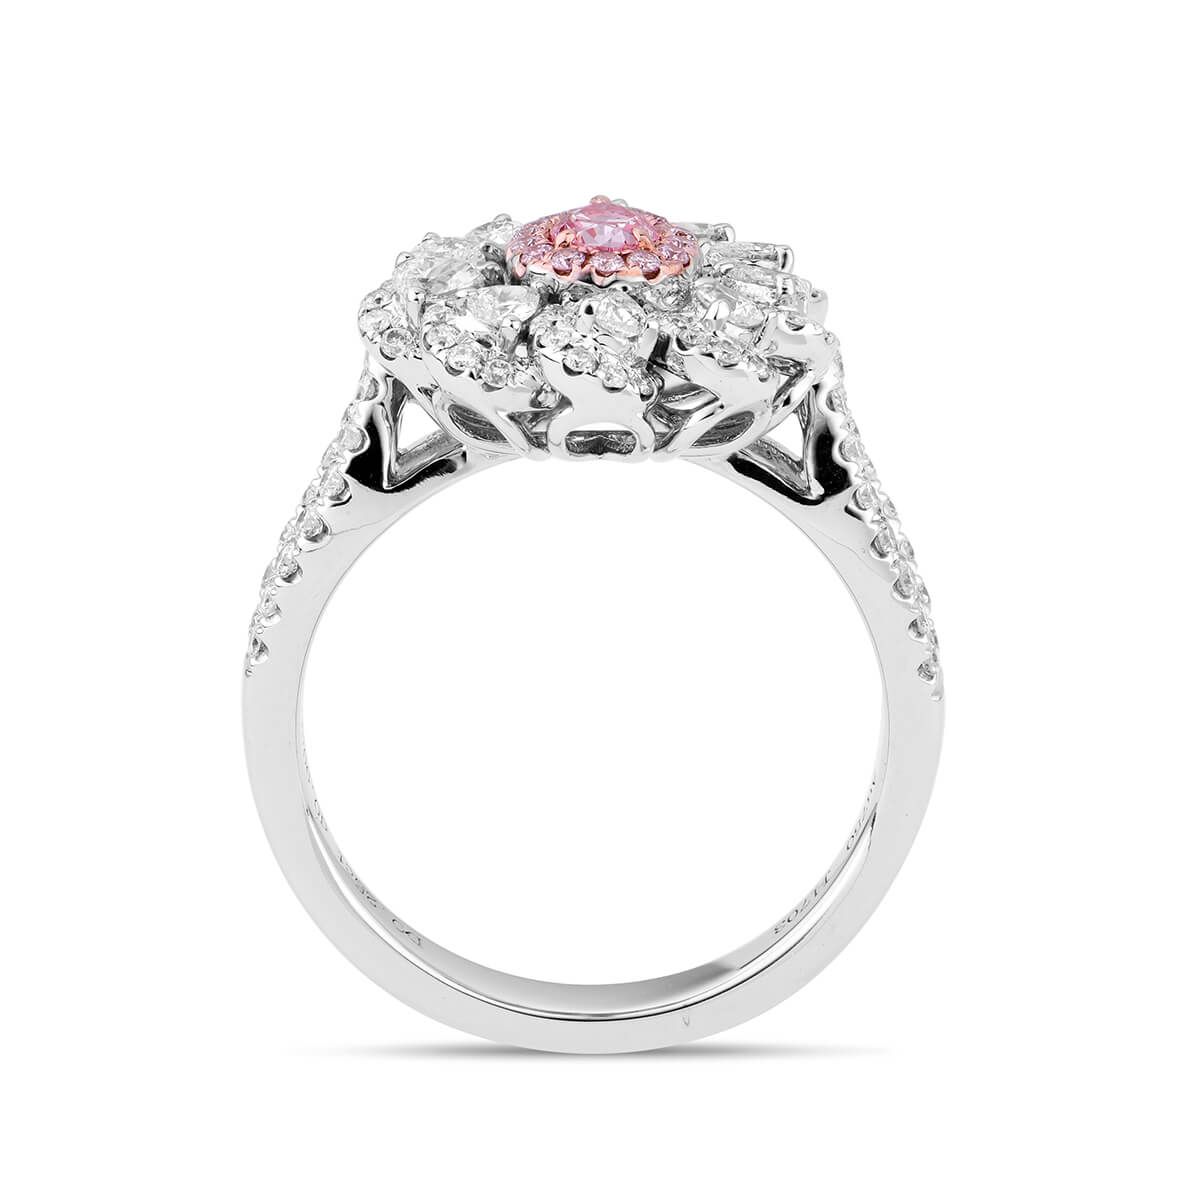 Fancy Light Pink Diamond Ring, 1.15 Ct. TW, Pear shape, GIA Certified, 2193197042